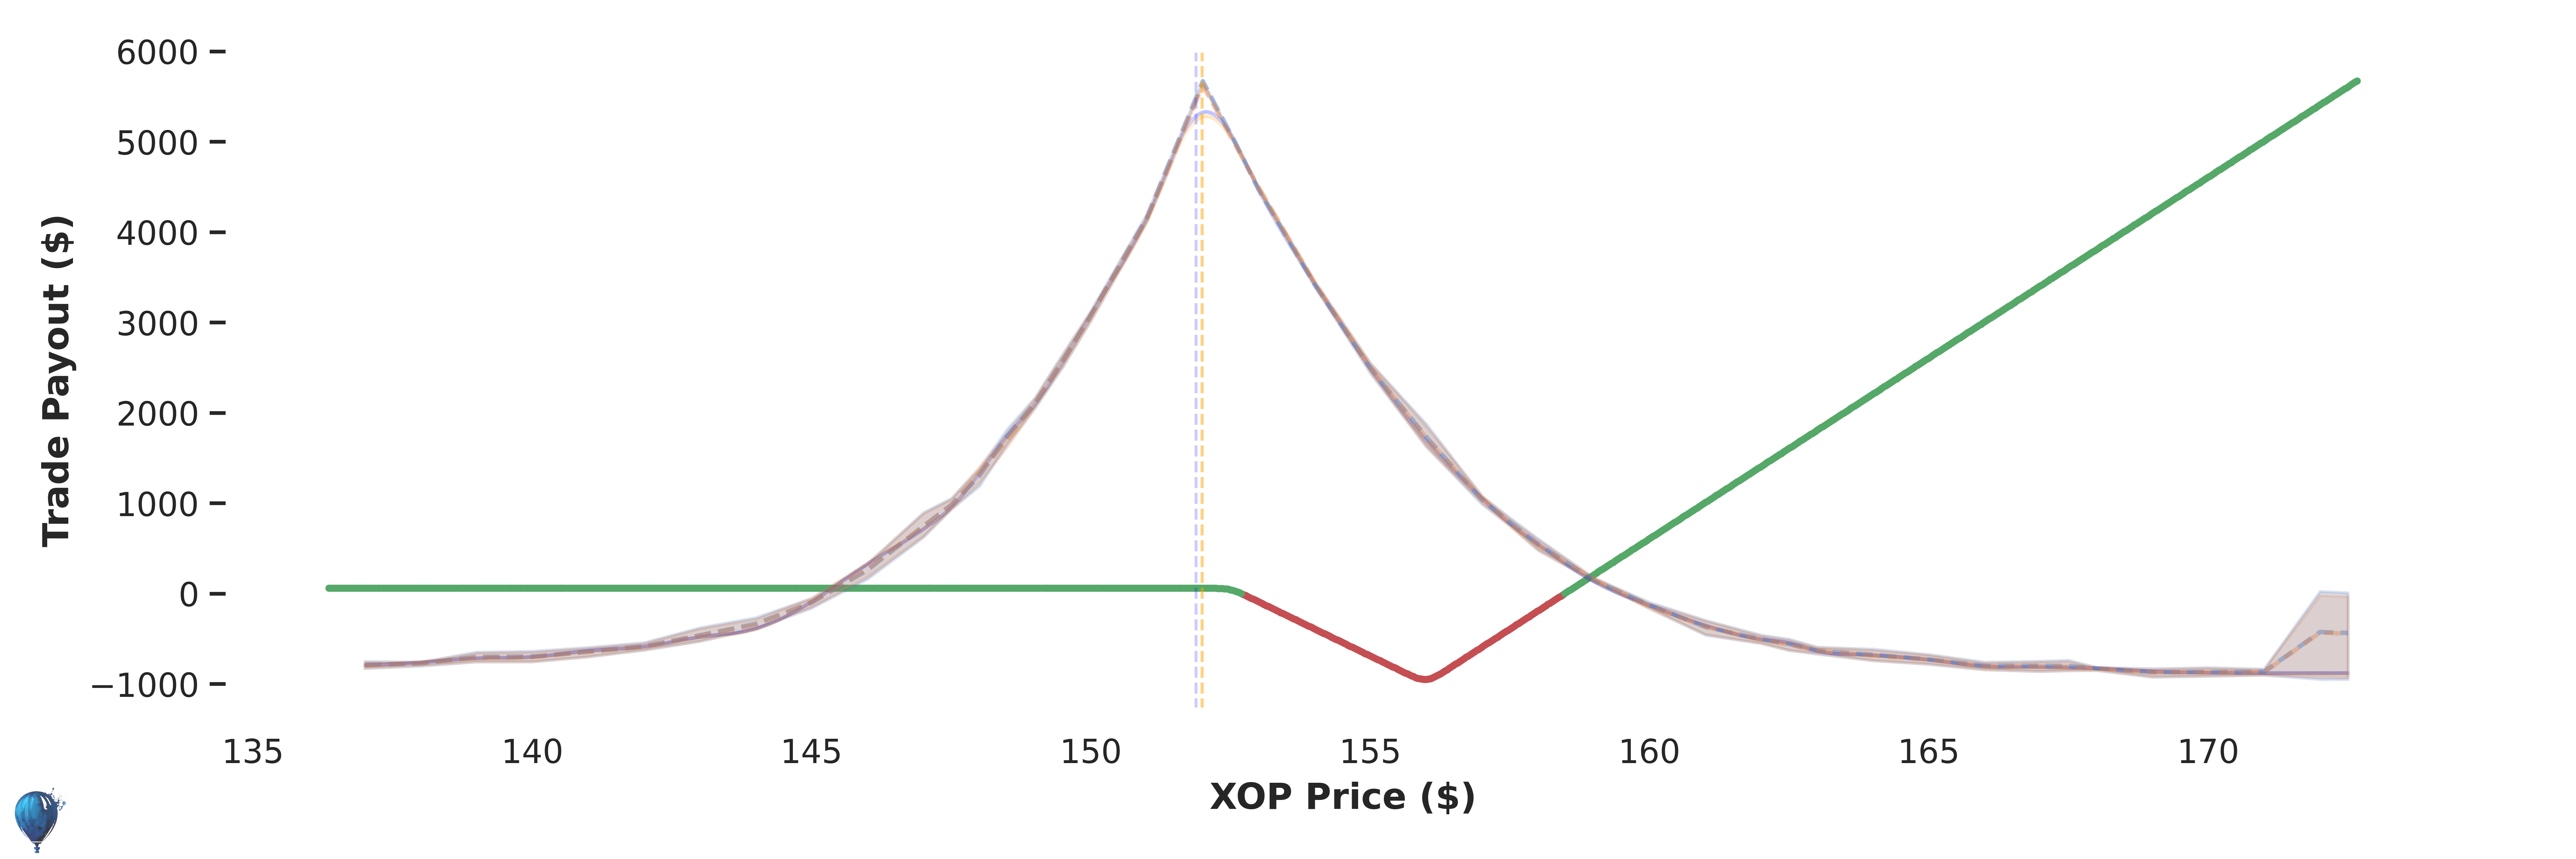 XOP trade payout at expiration